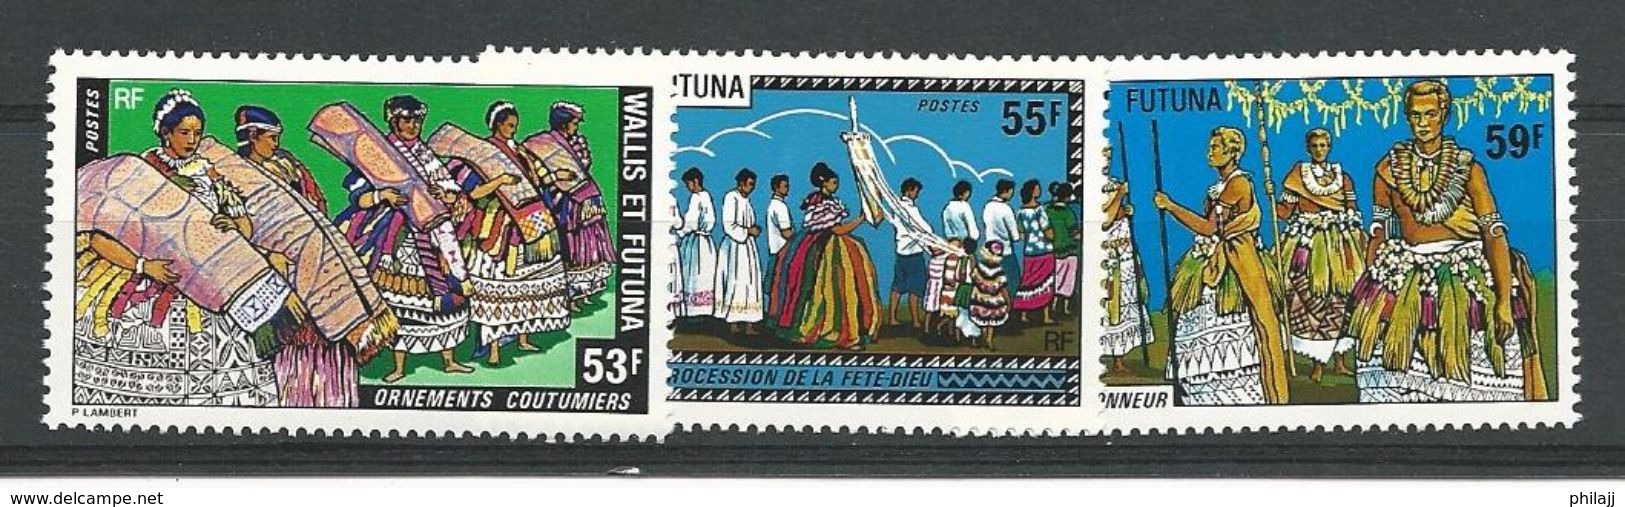 Wallis Et Futuna-Année 1978-Y&T N°221 à 223neufs** - Unused Stamps